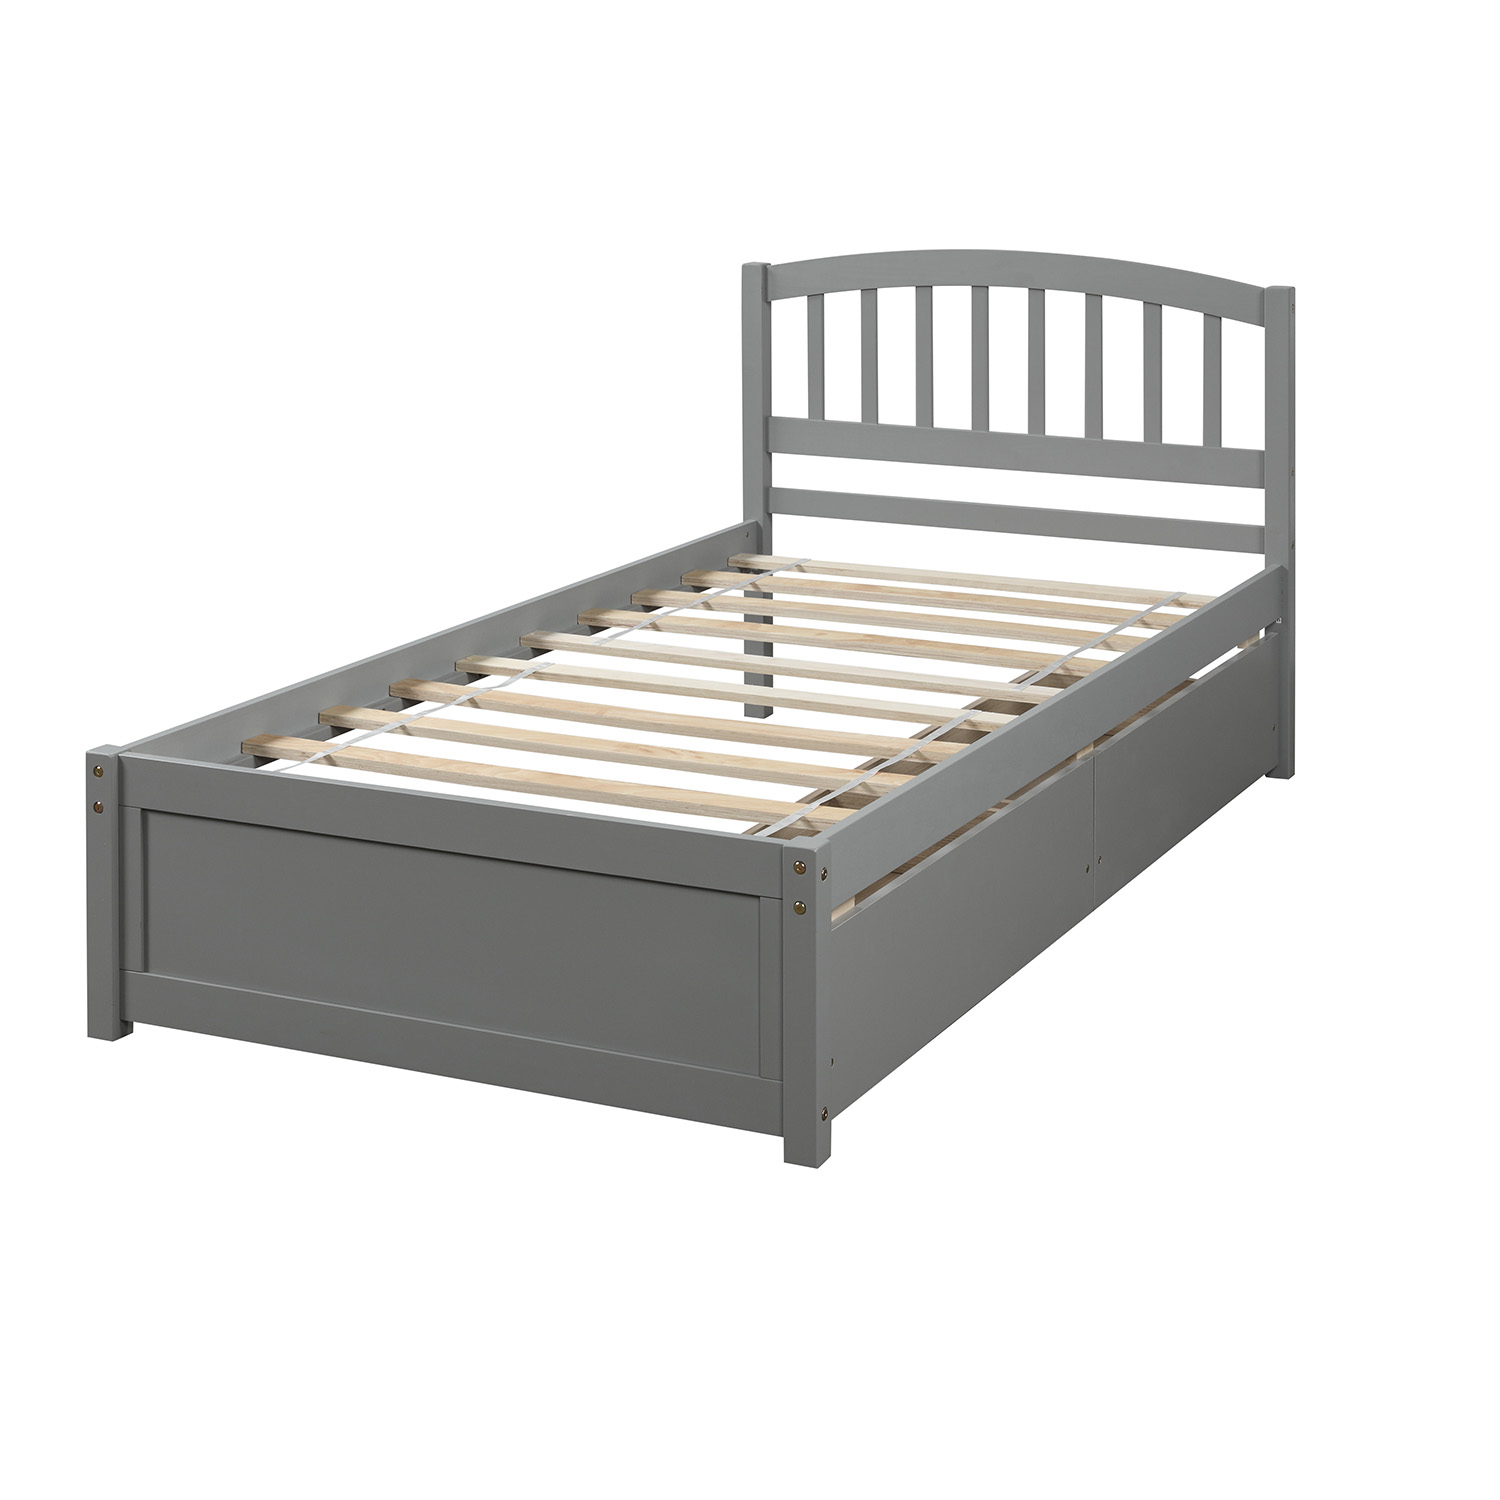 Moda Furnishings Twin Platform Storage, Platform Bed With Drawers Twin Size